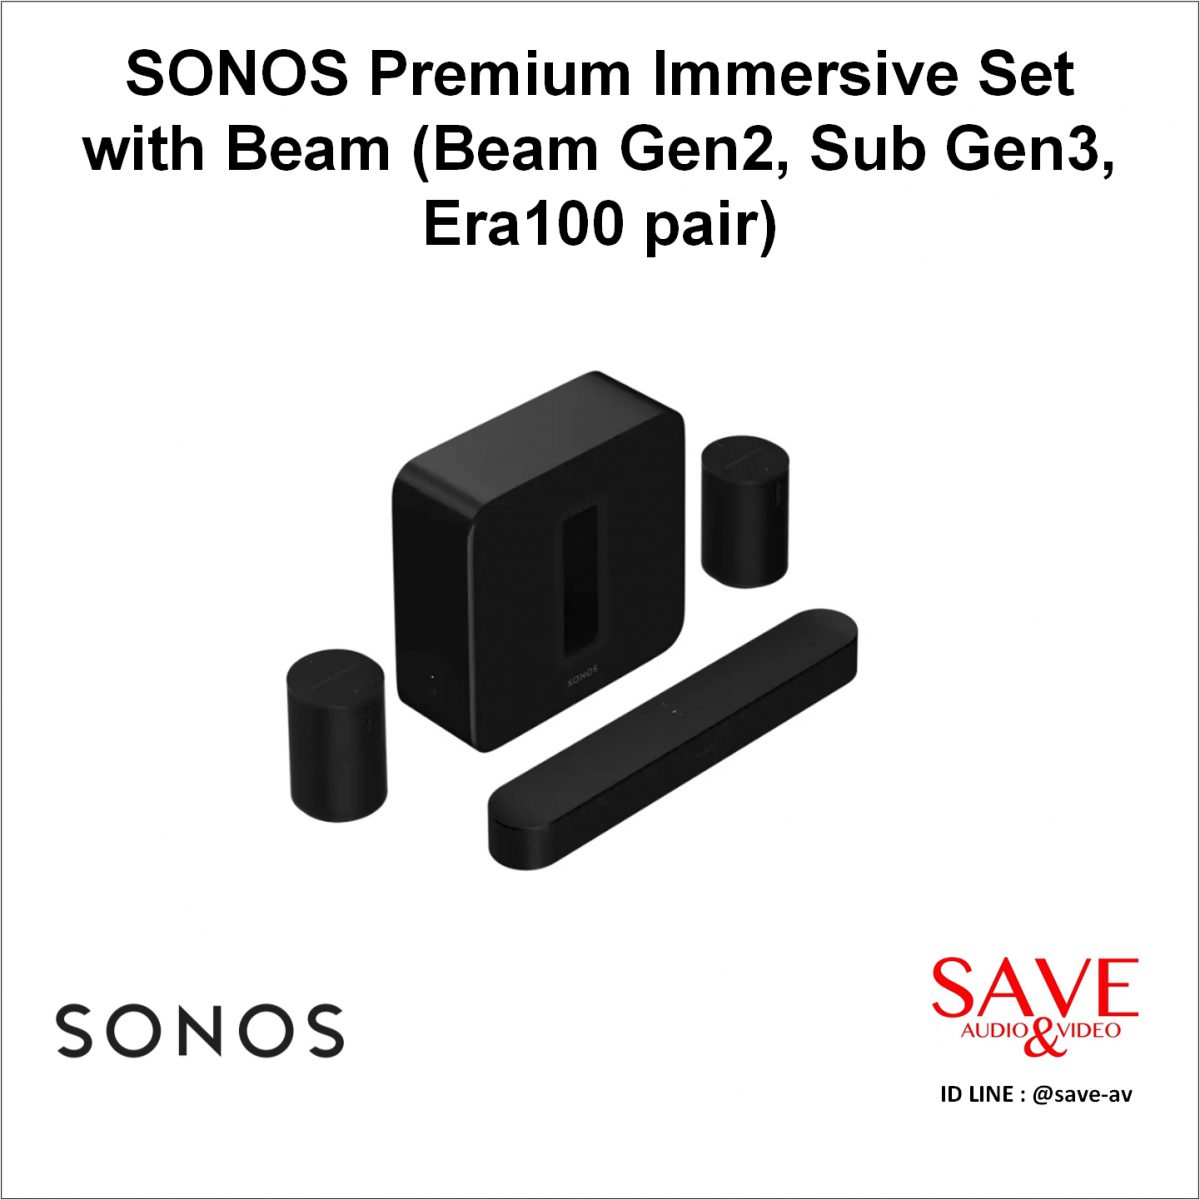 Sonos Thailand SONOS Premium Immersive Set with Beam (Beam Gen2, Sub Gen3, Era100 pair)